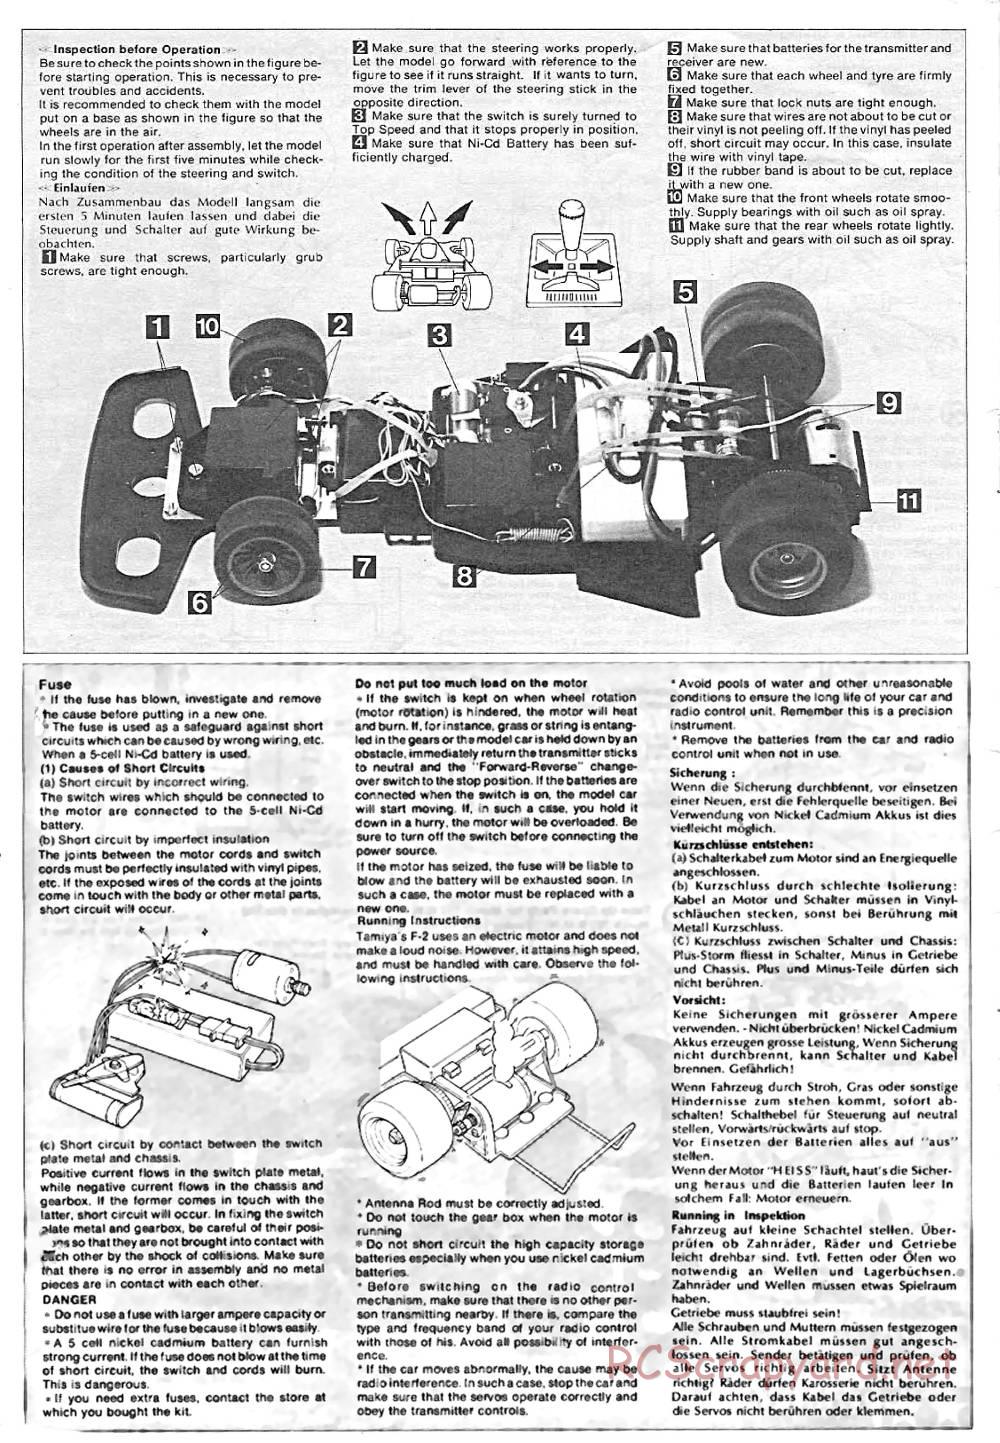 Tamiya - Martini Mk22 Renault (F2) - 58014 - Manual - Page 12